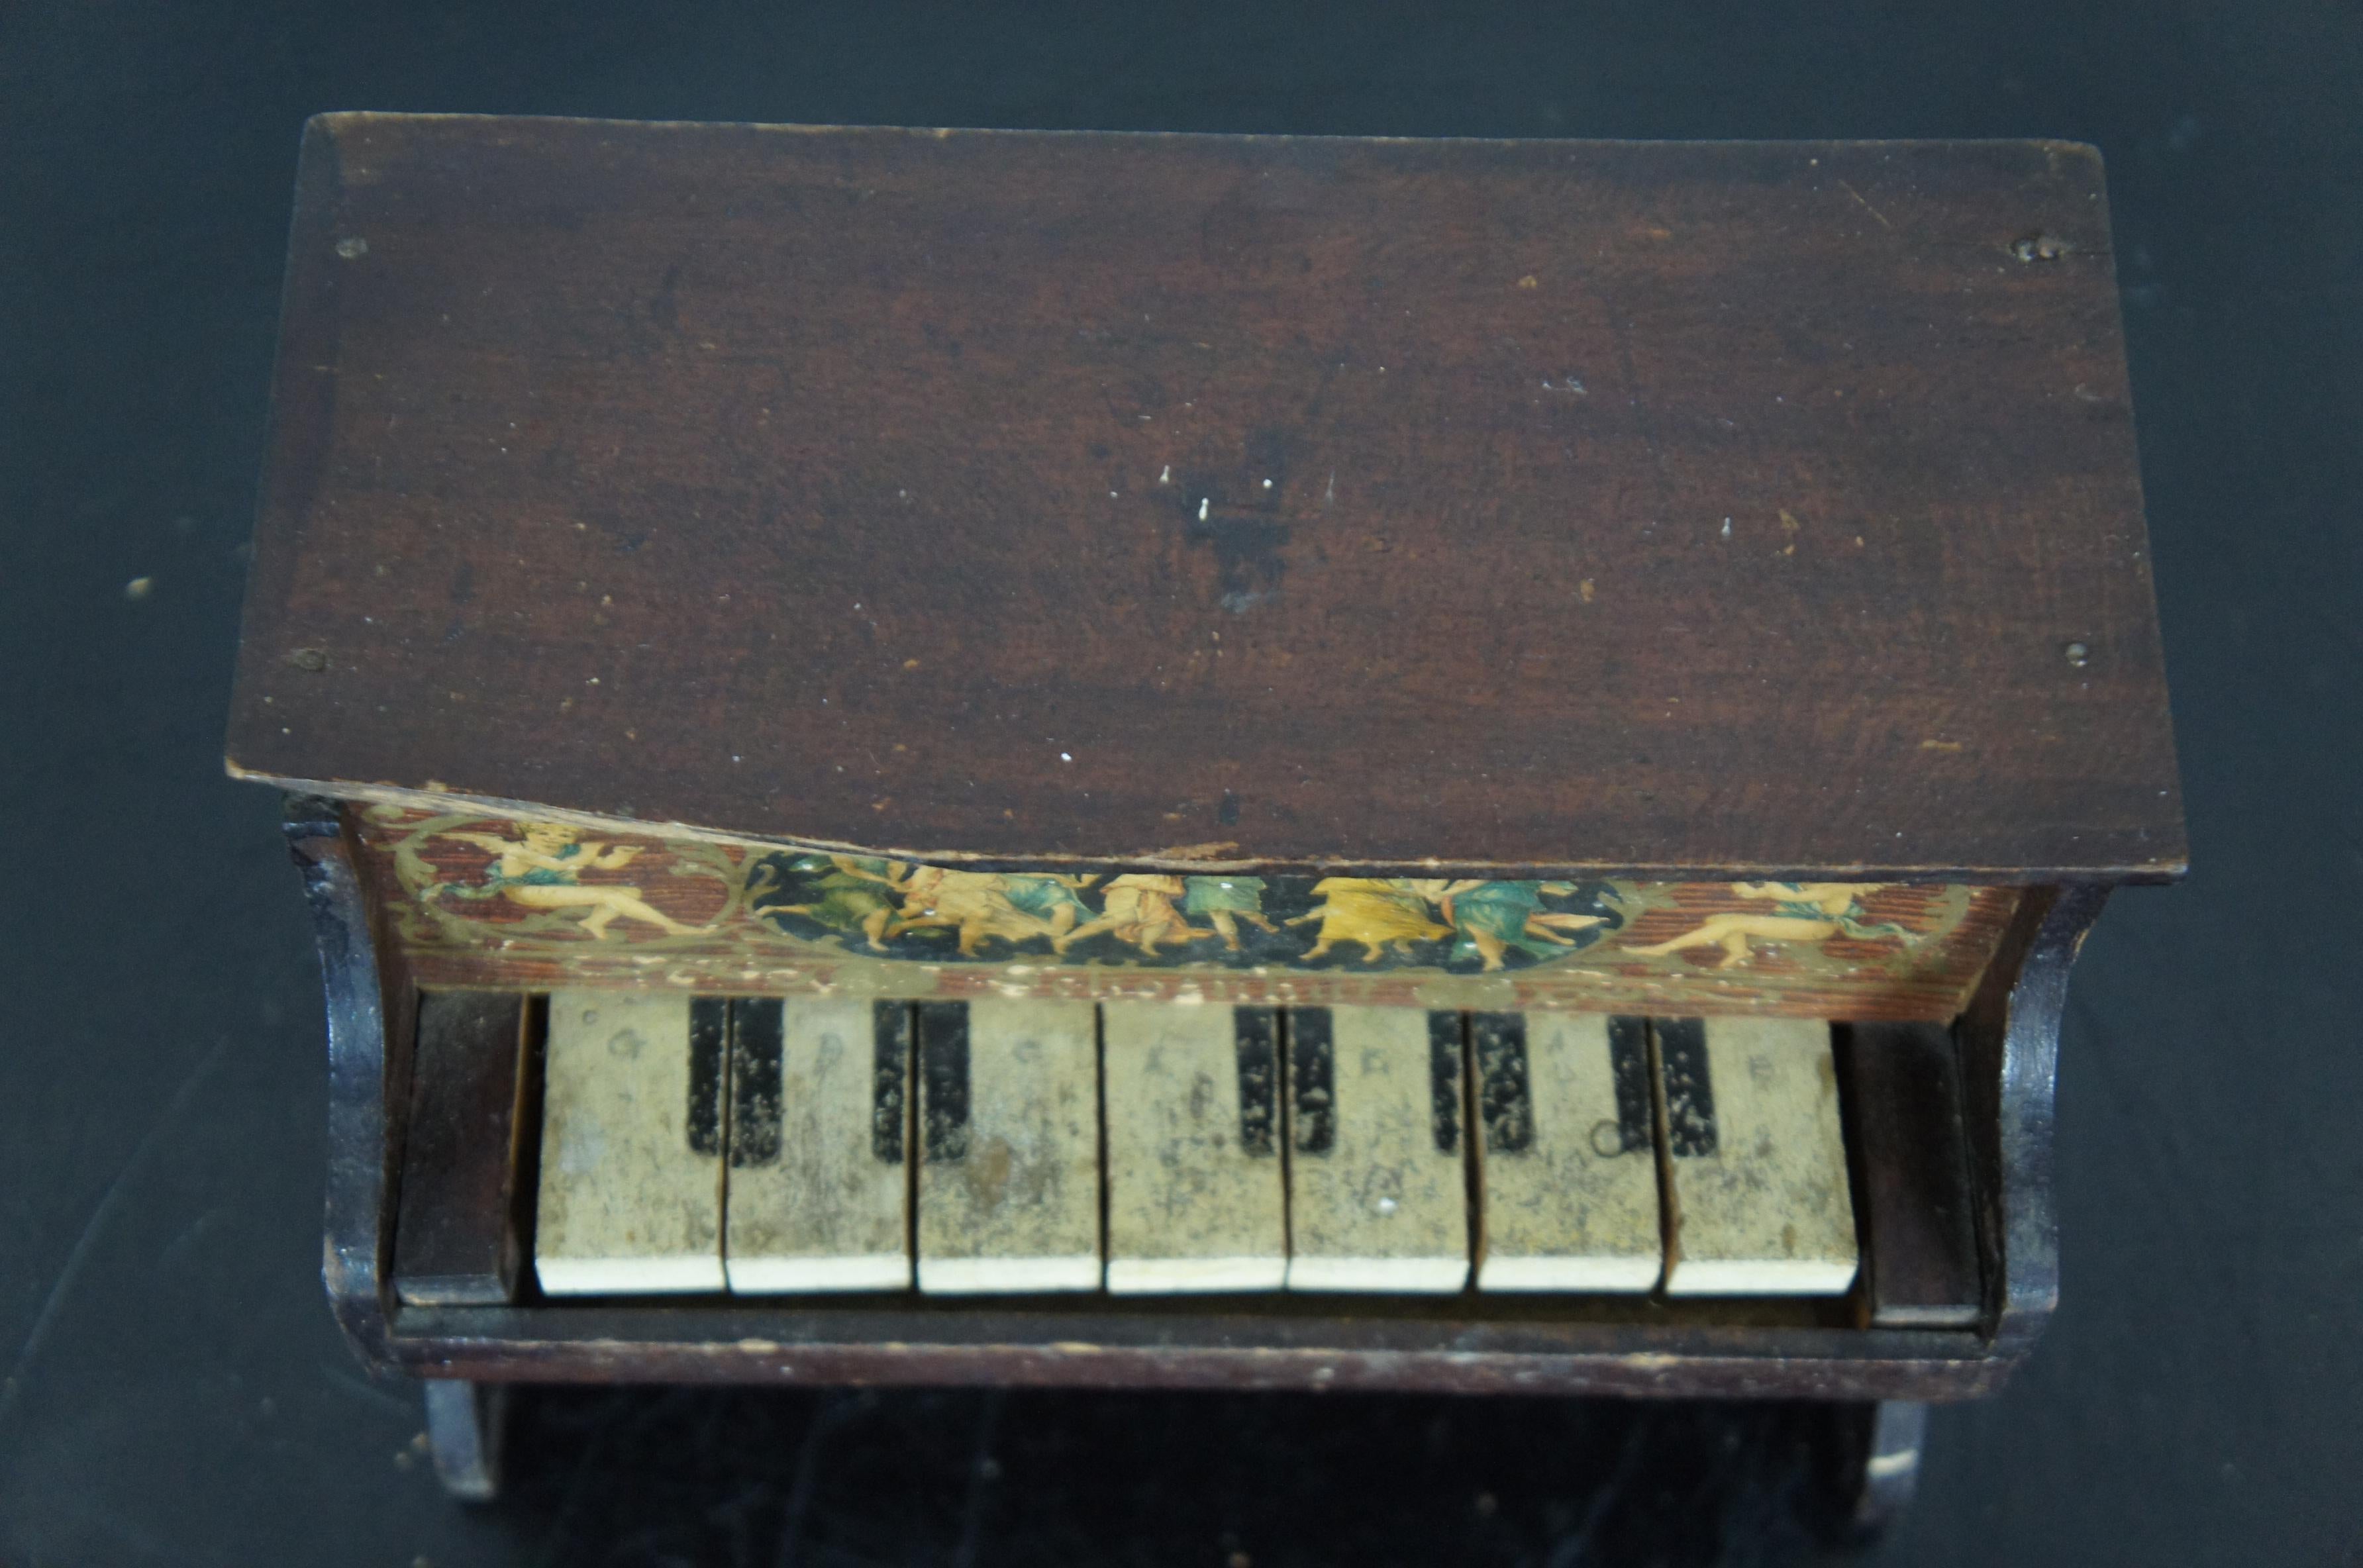 schoenhut piano vintage